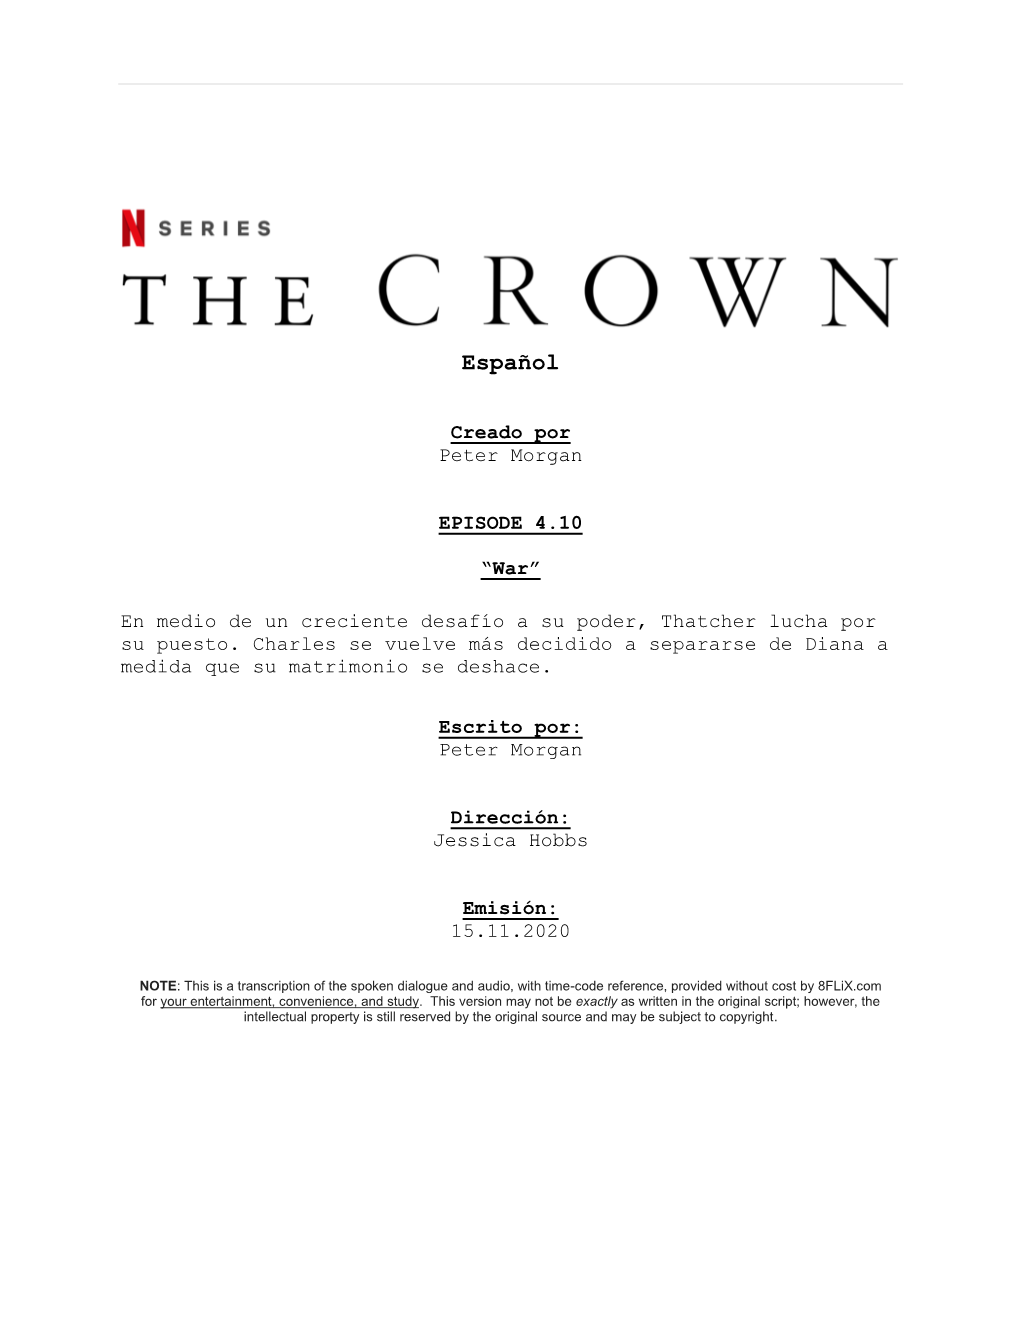 The Crown | Spanish Dialogue Transcript | S4:E10